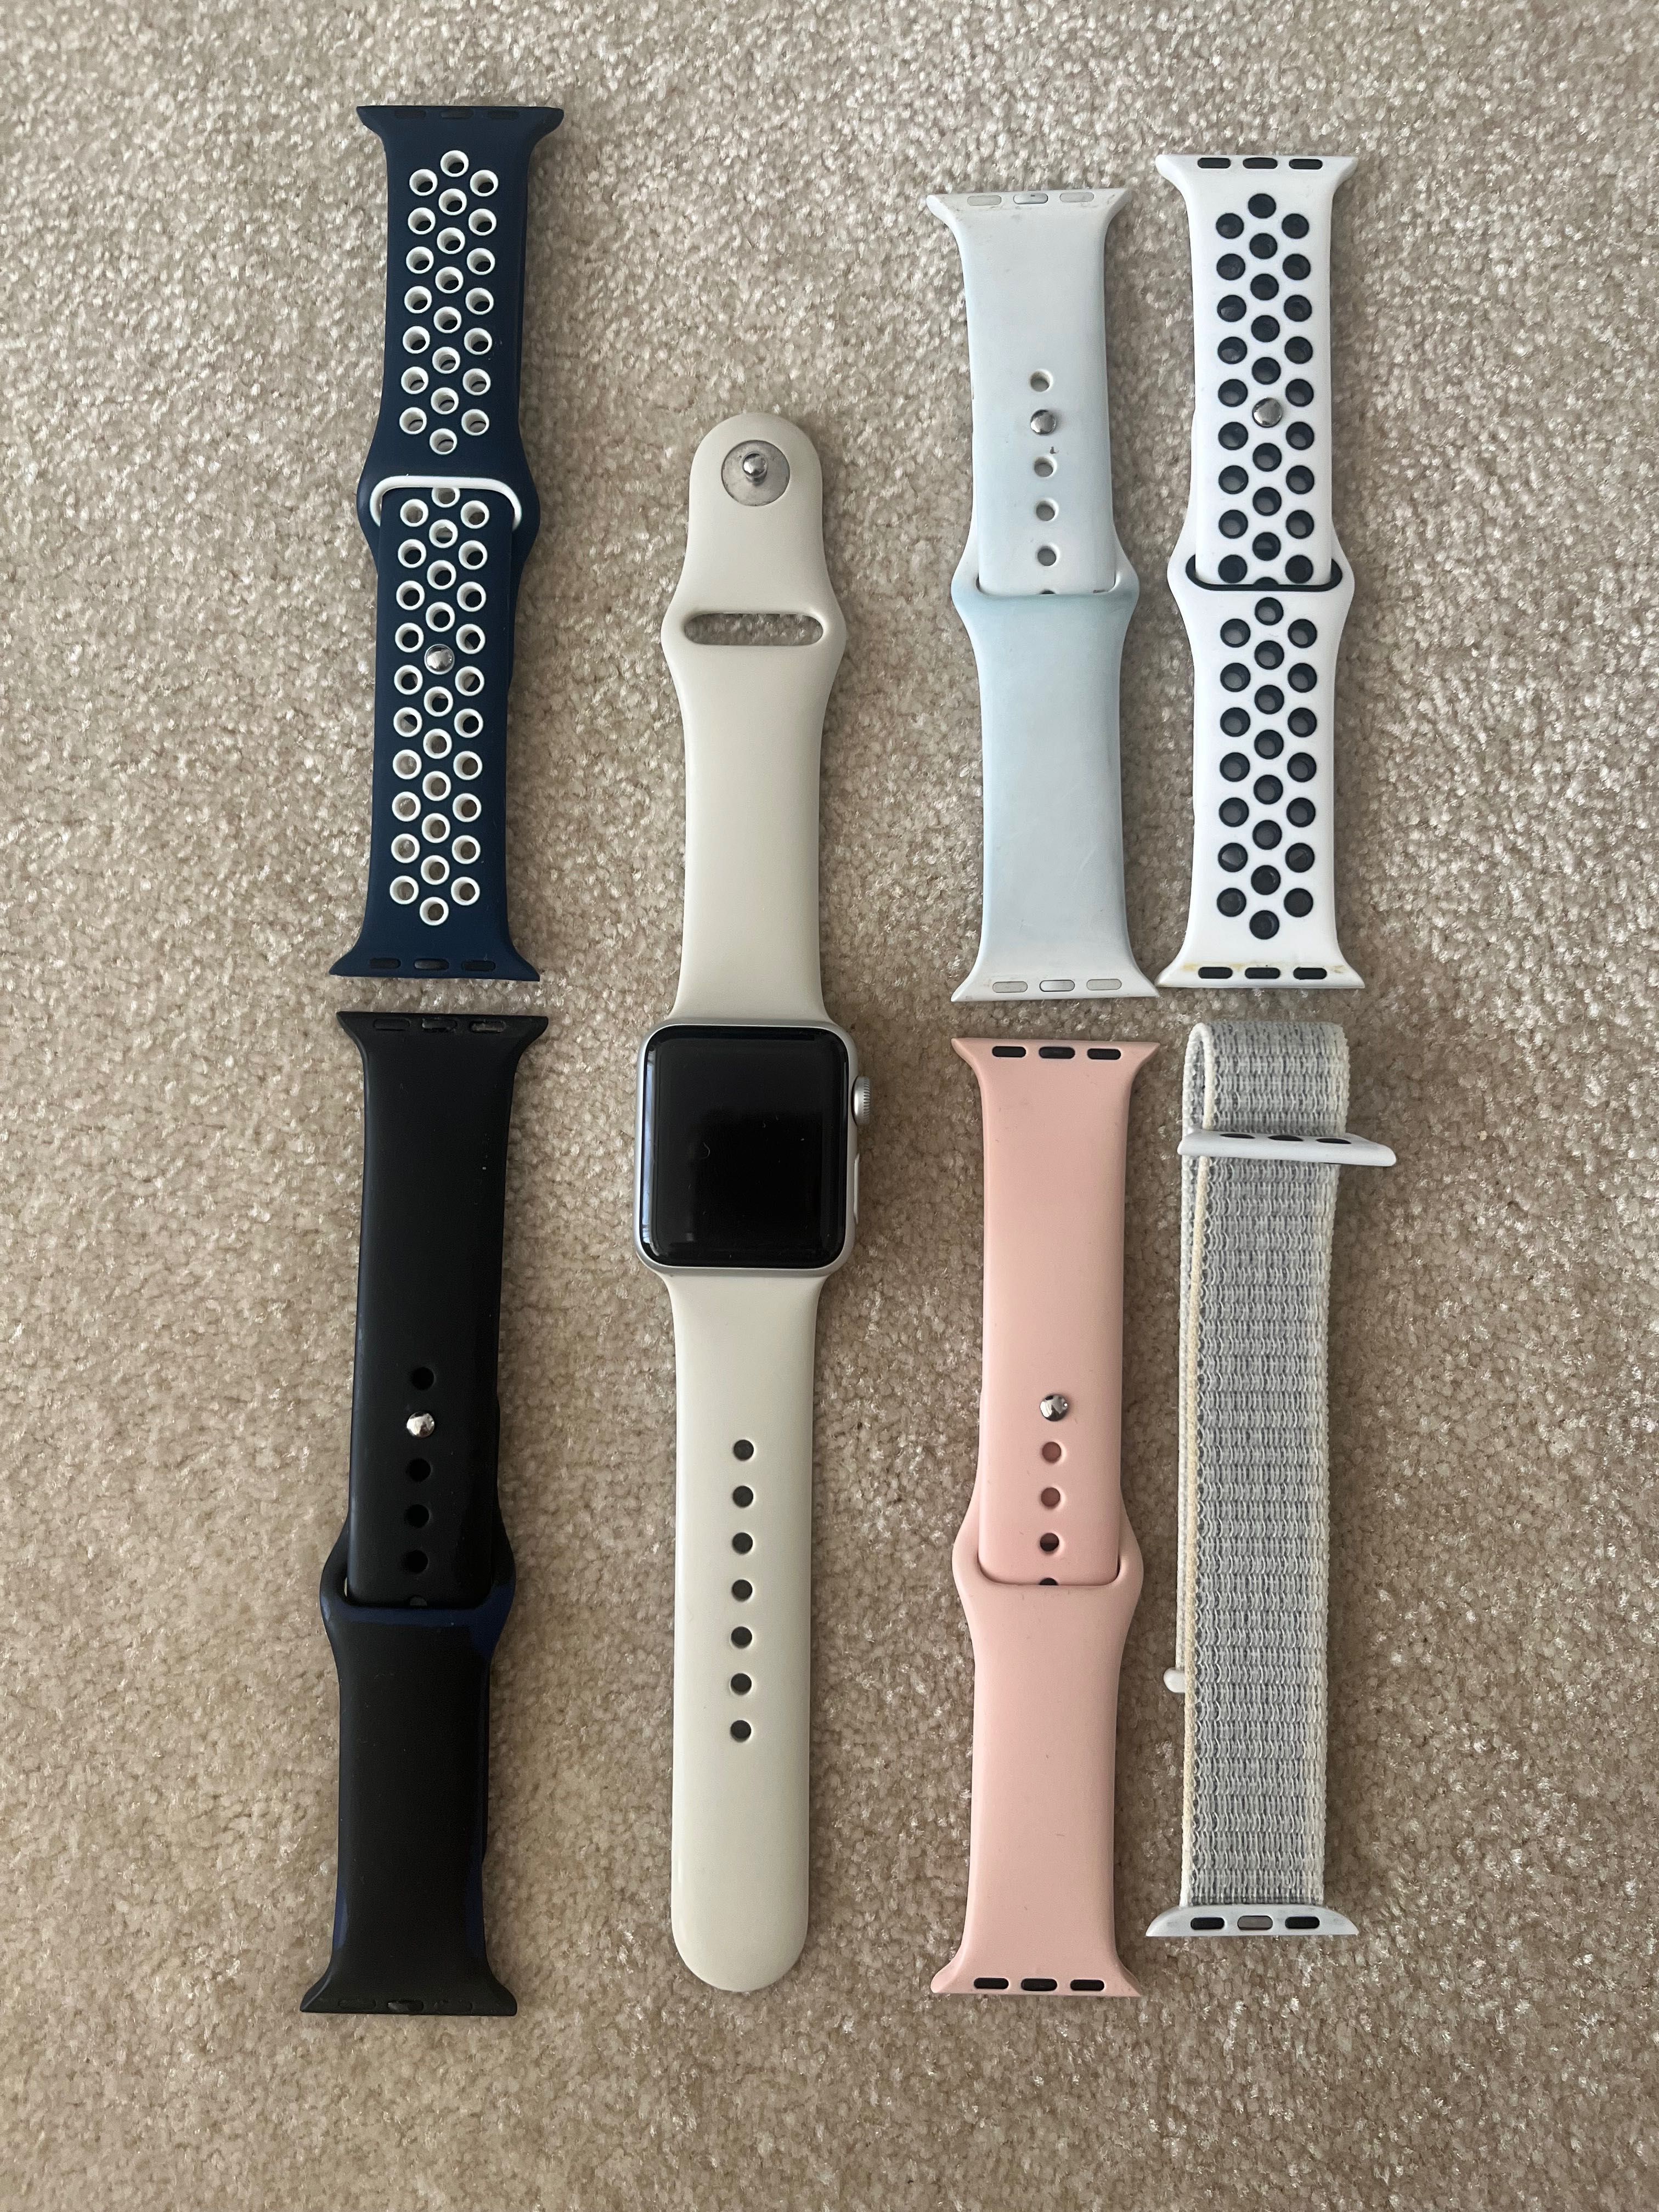 Apple Watch Series 3 com pulseiras de oferta